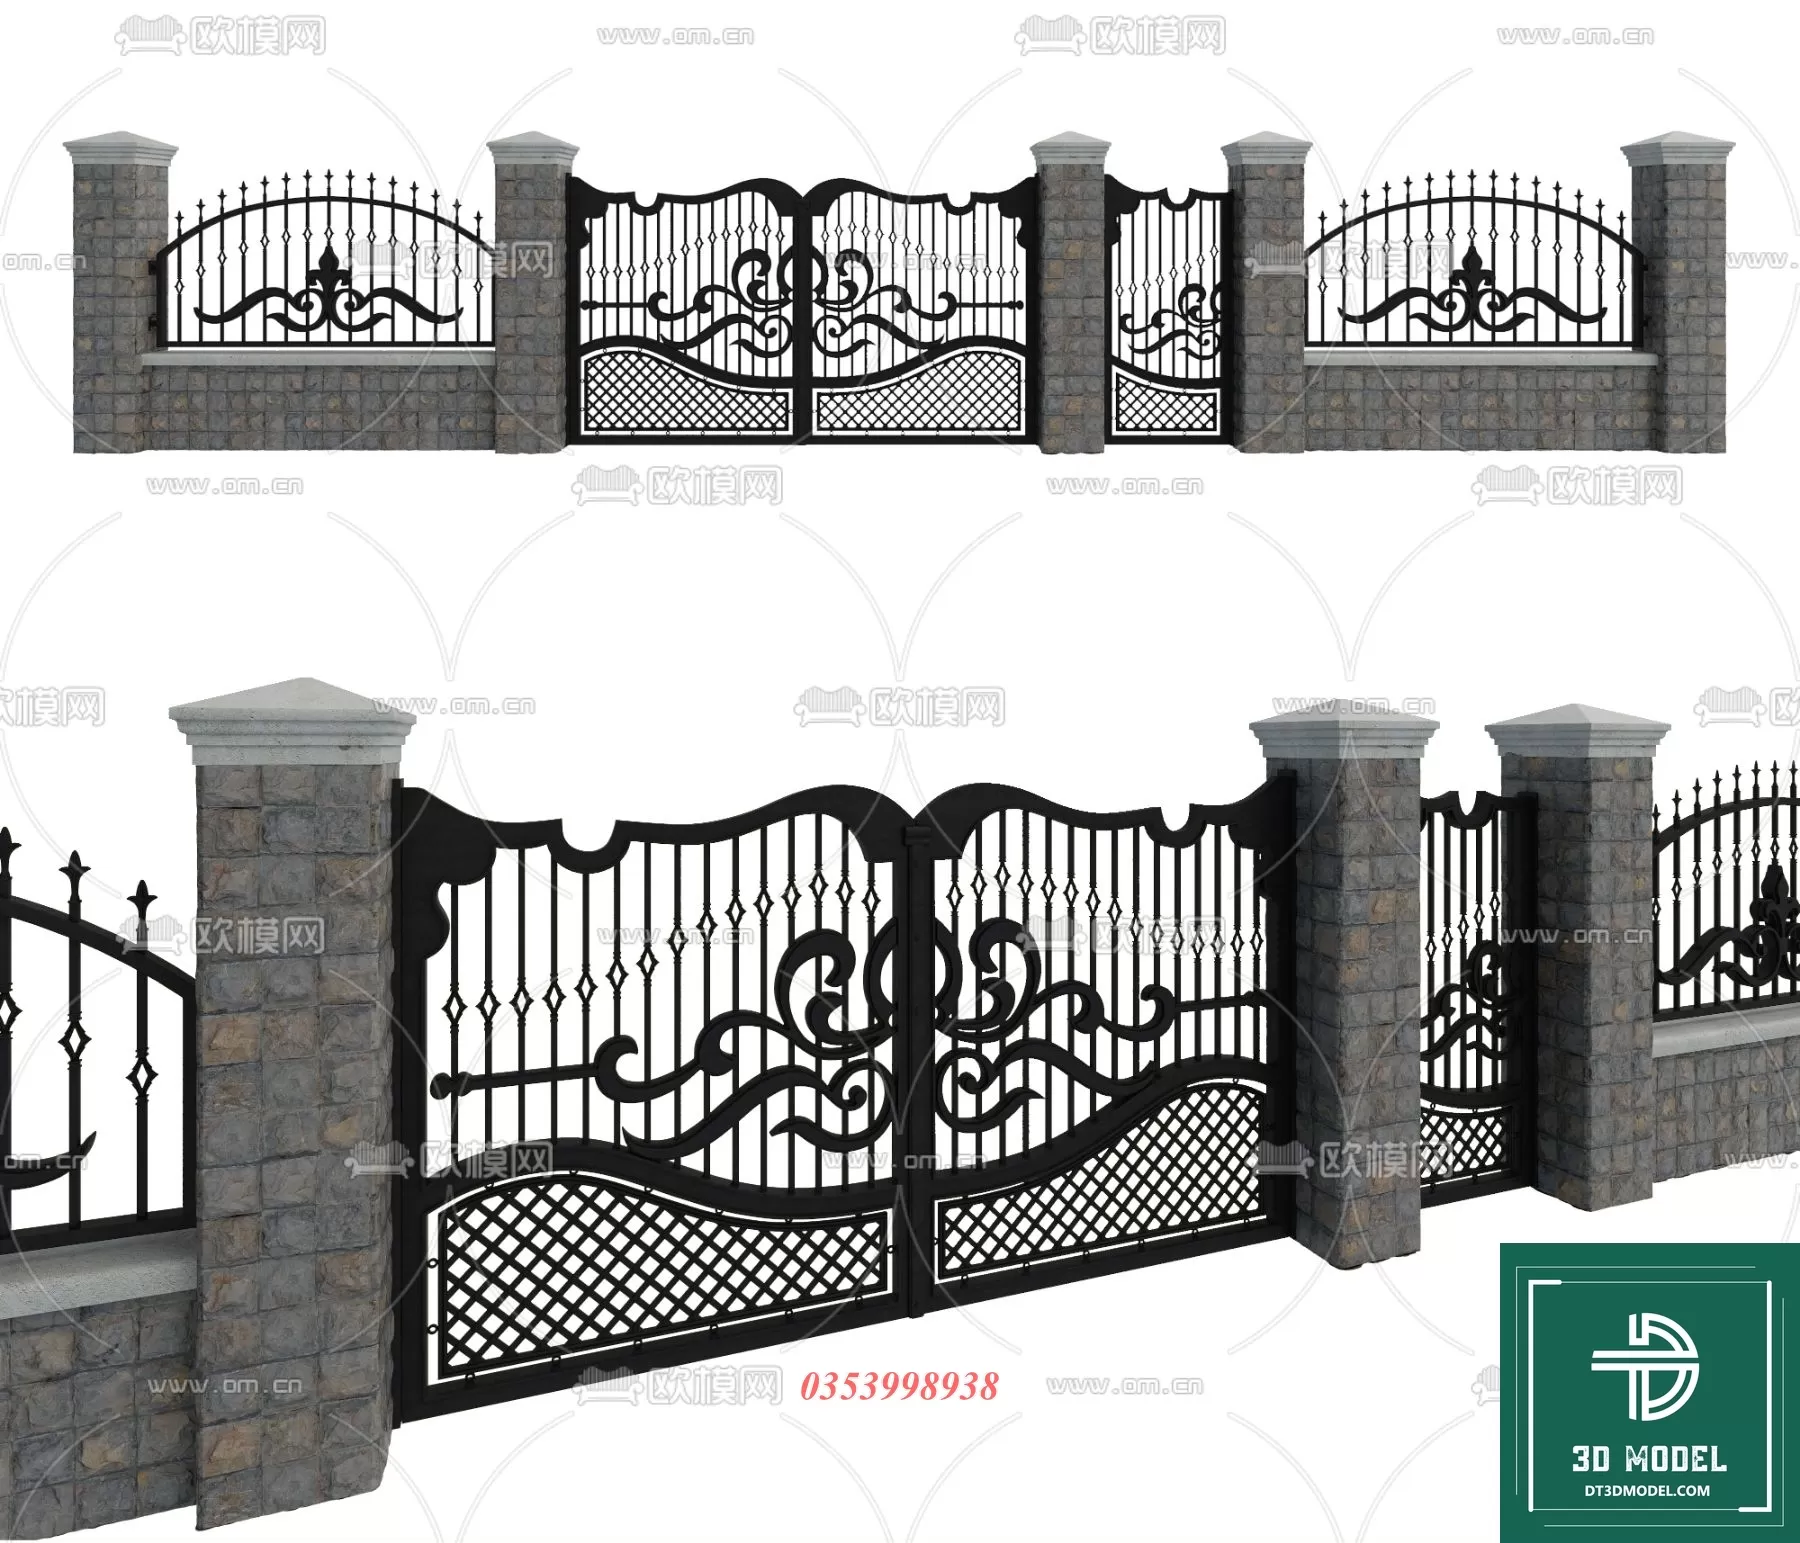 CLASSIC GATE – 3D MODELS – 088